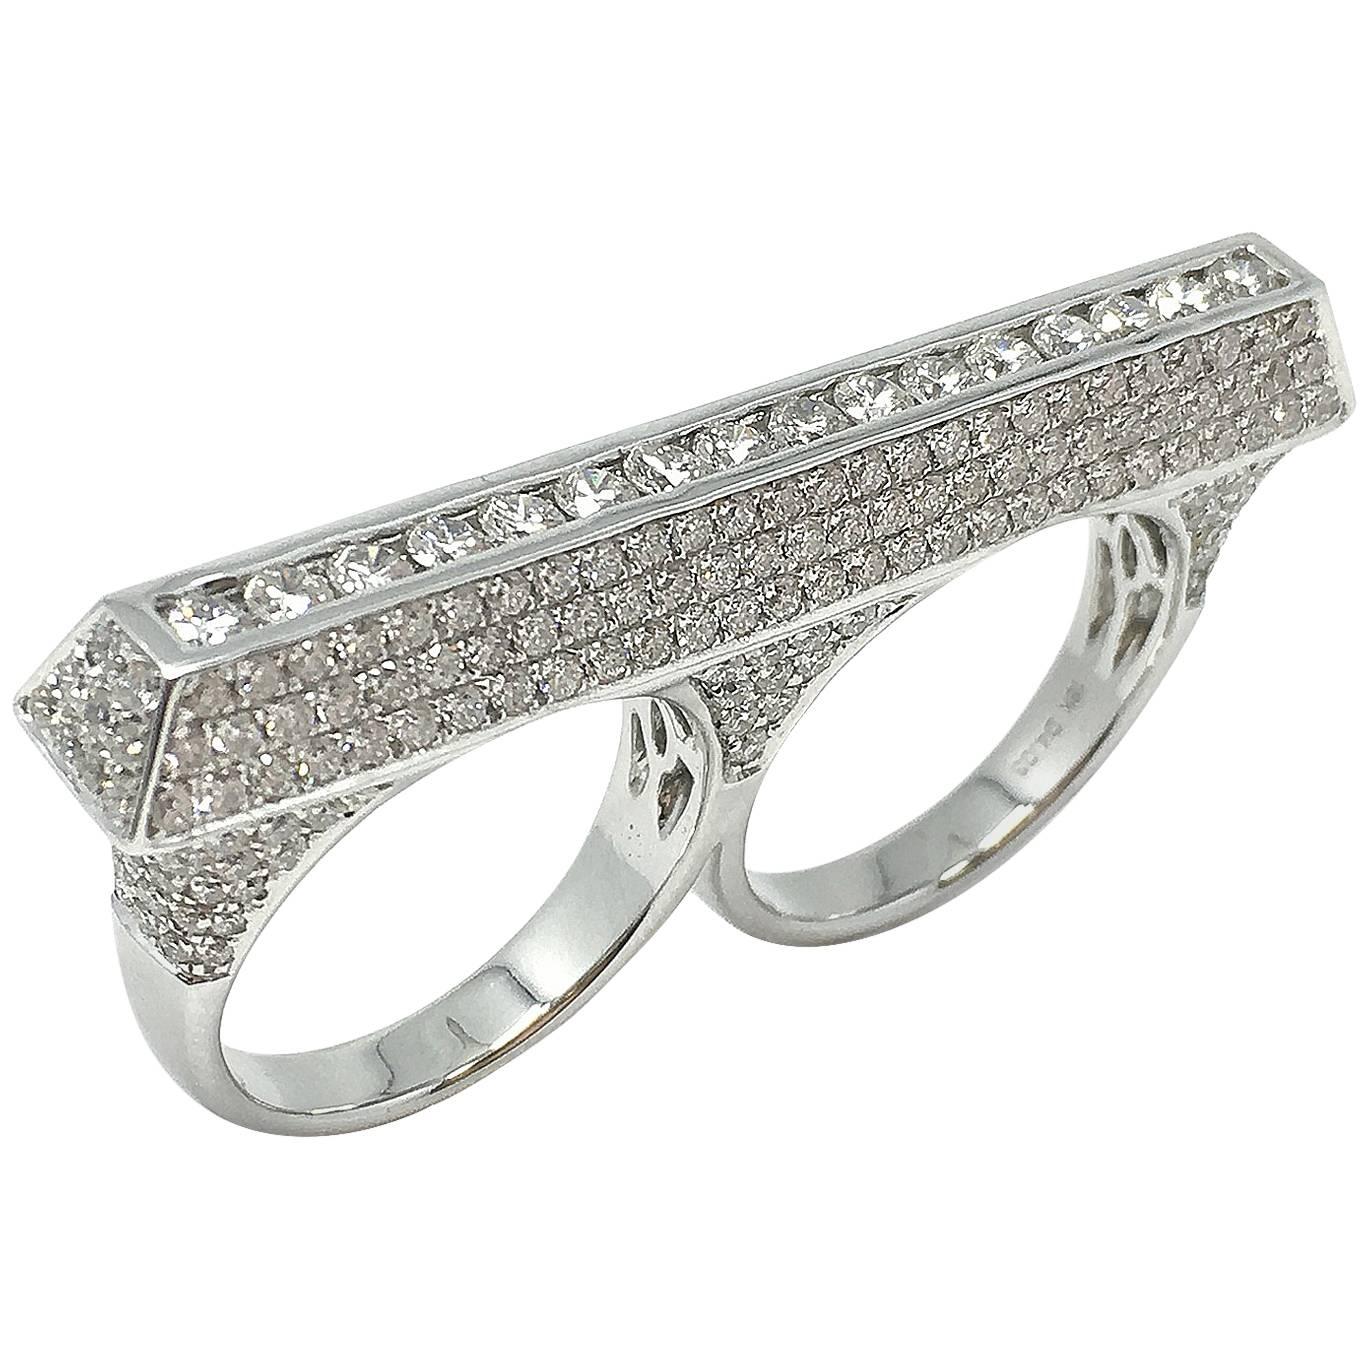 Two-Finger Diamond Fashion Ring